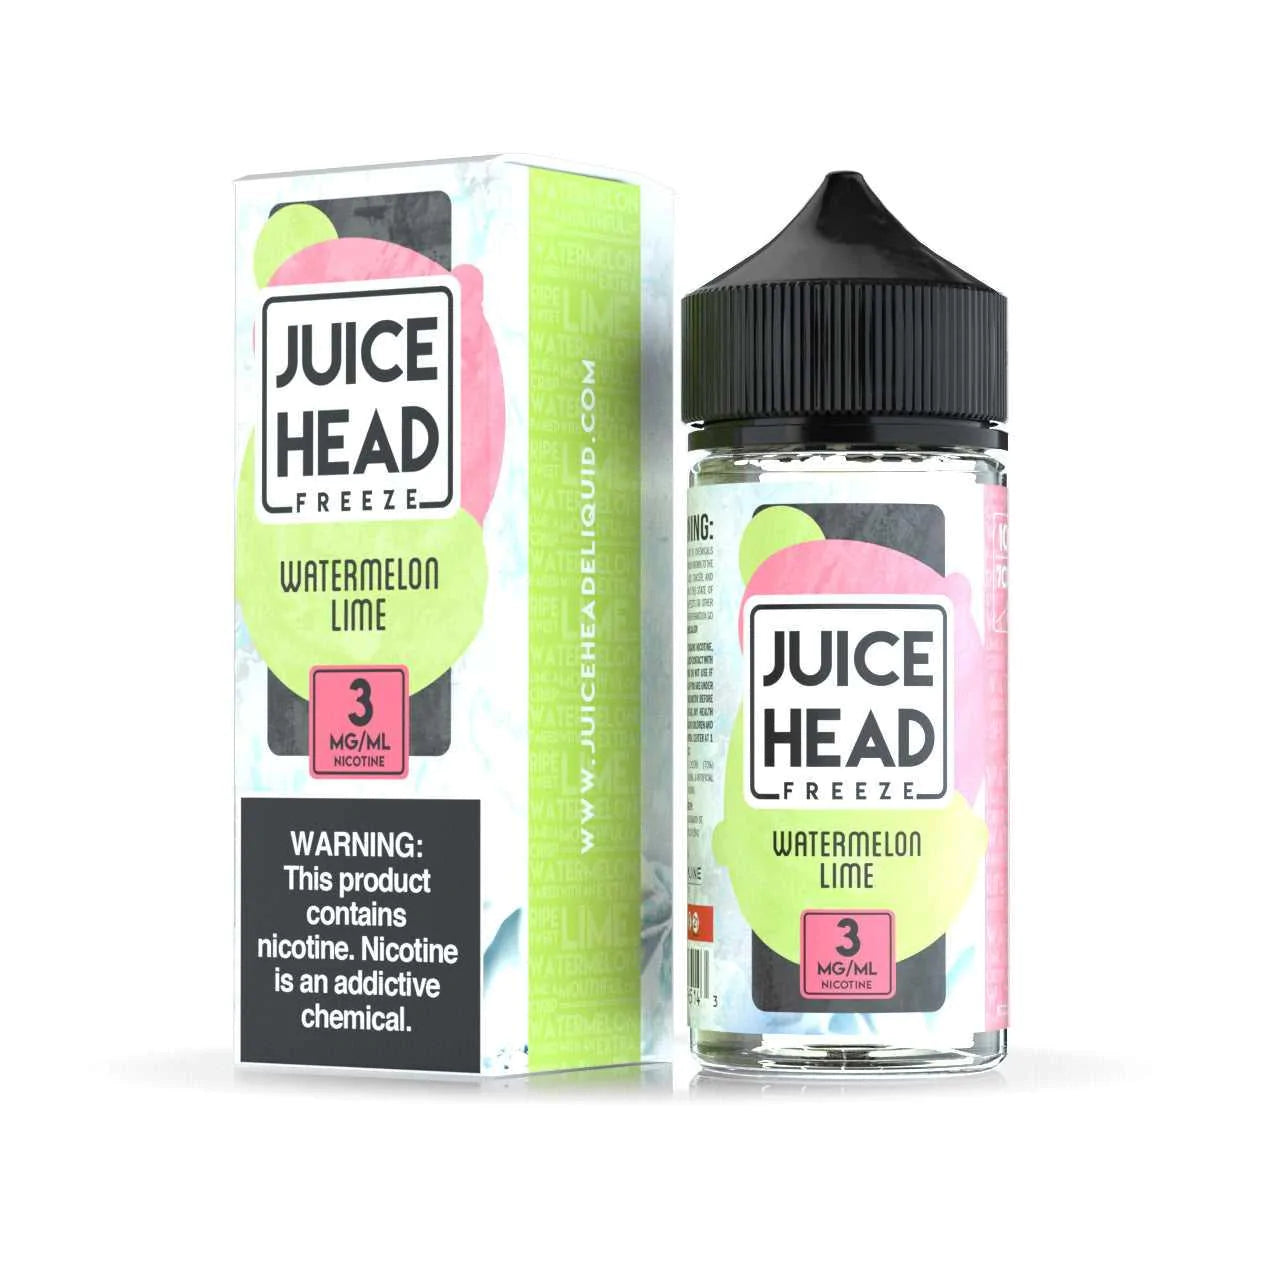 Juice Head Freeze: Watermelon Lime